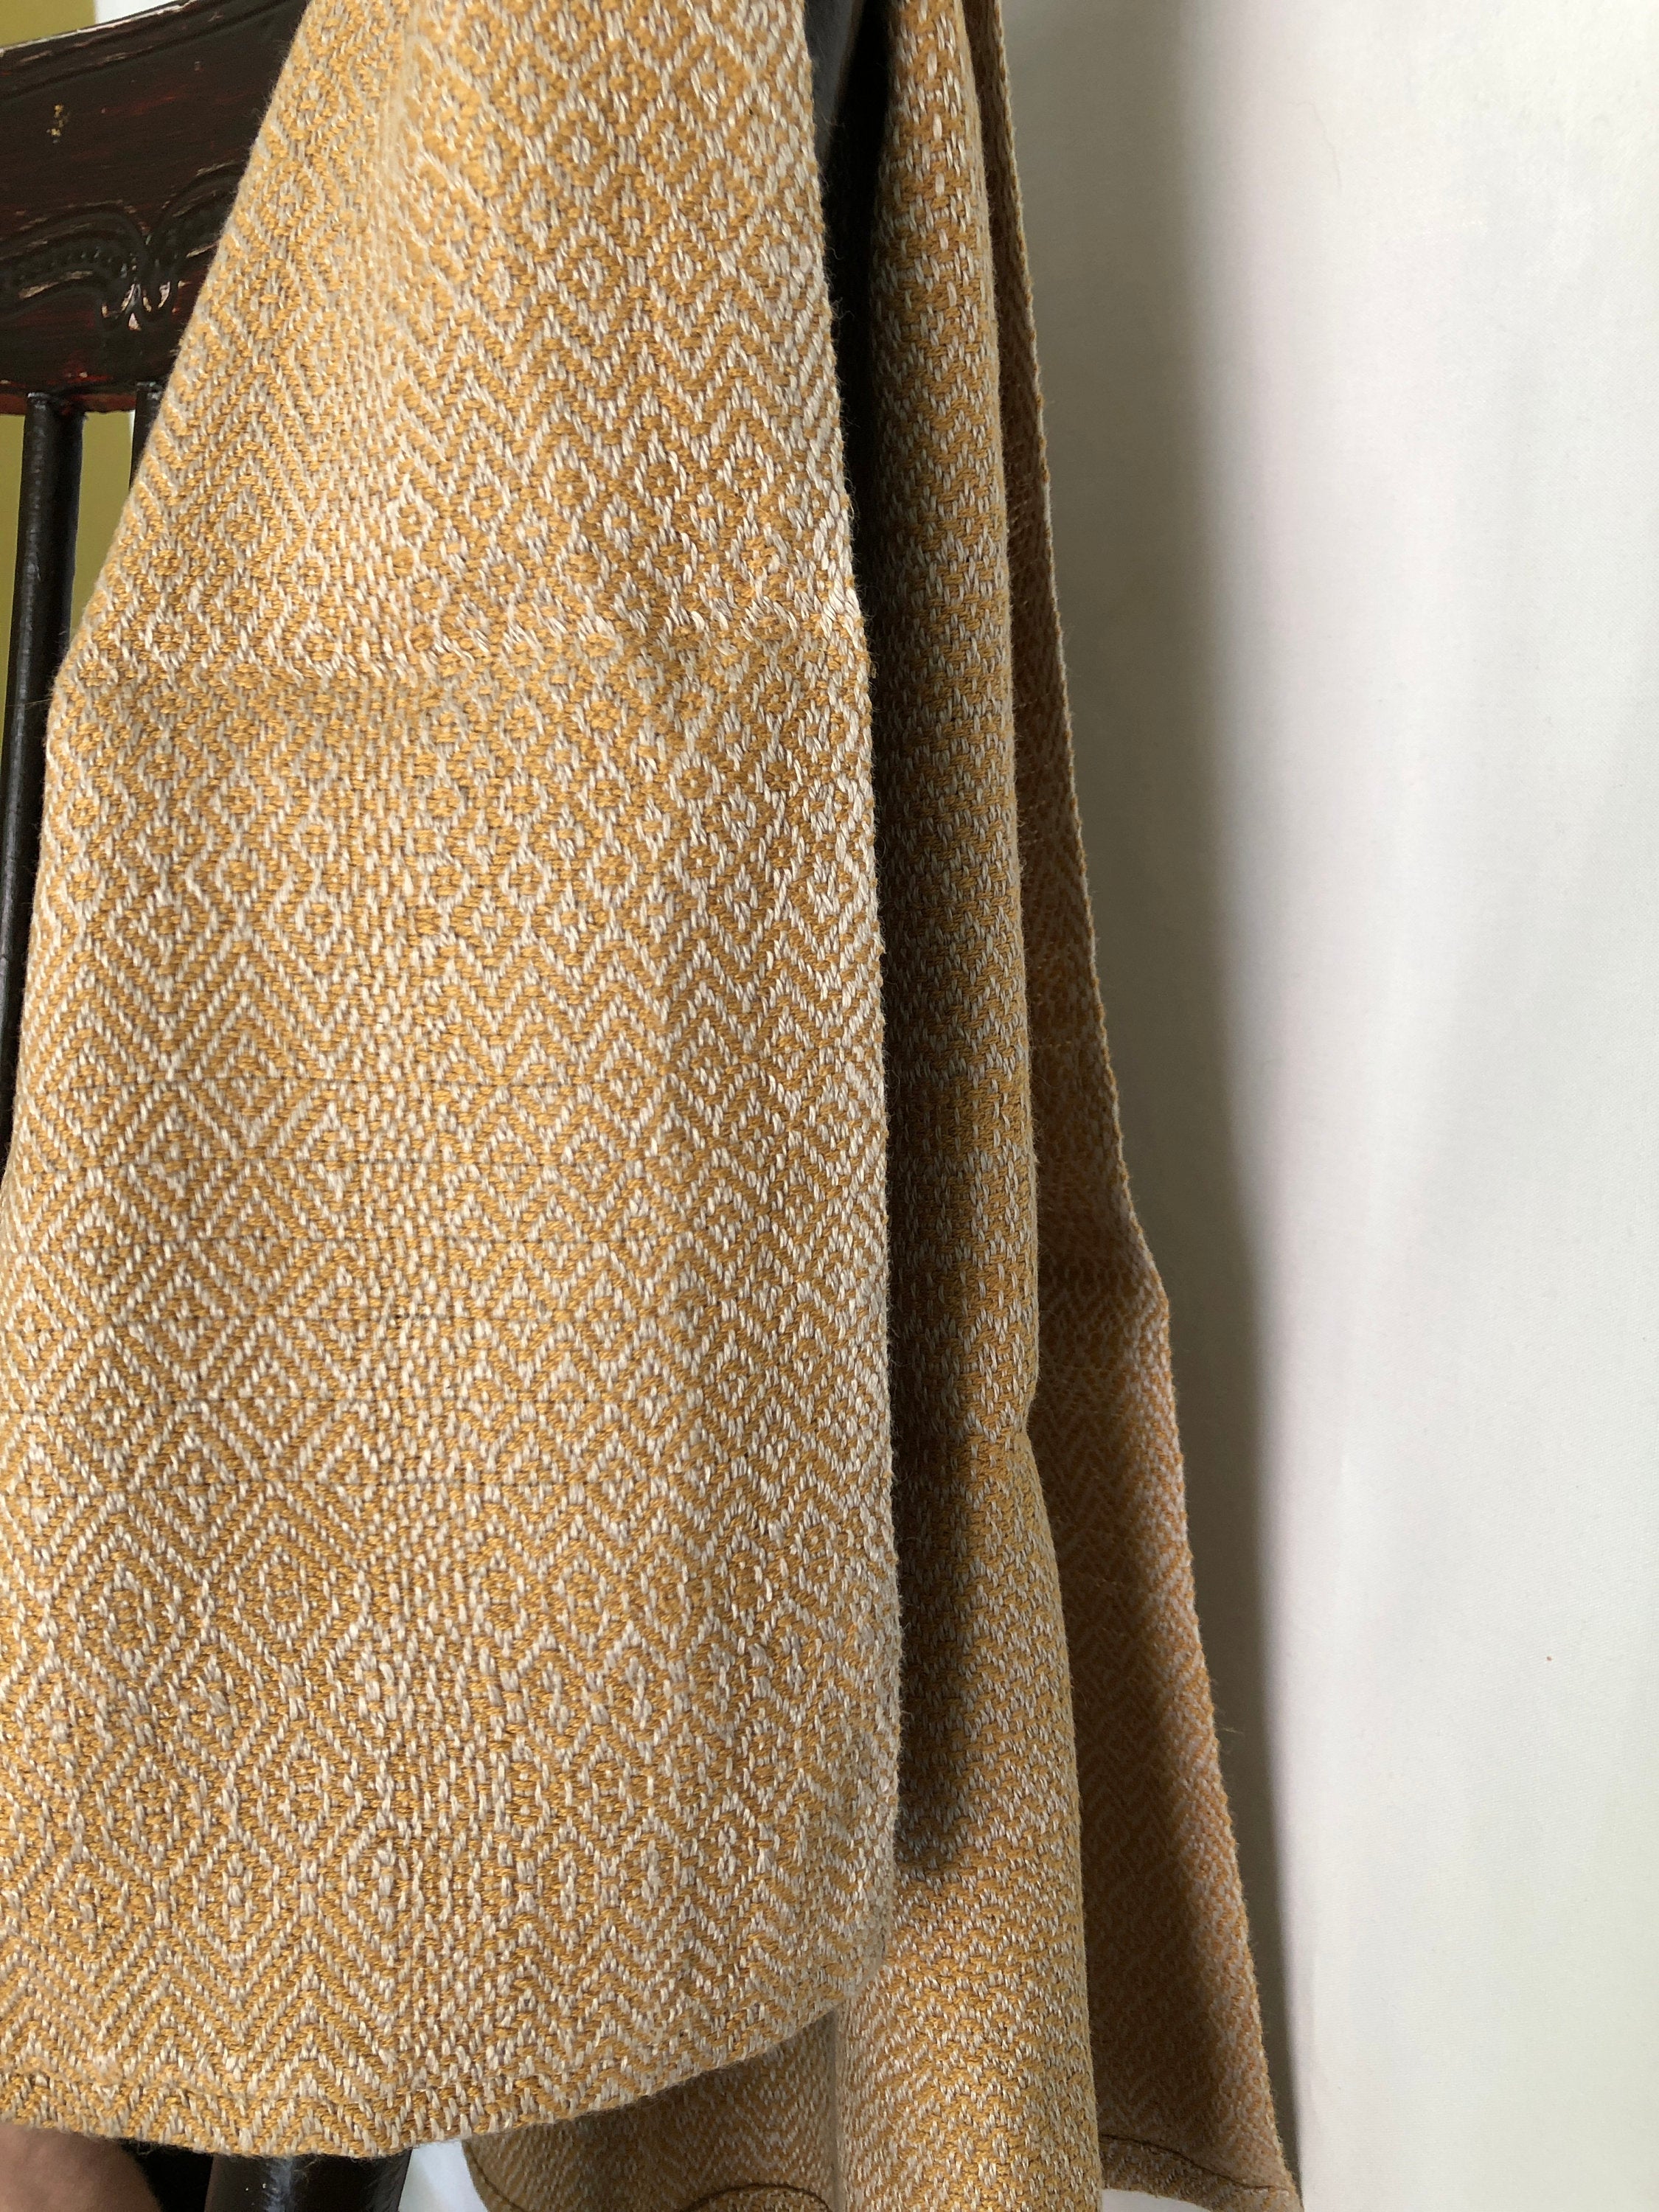 Original Seven Twills Tea Towel, Linen Cotton & Hemp